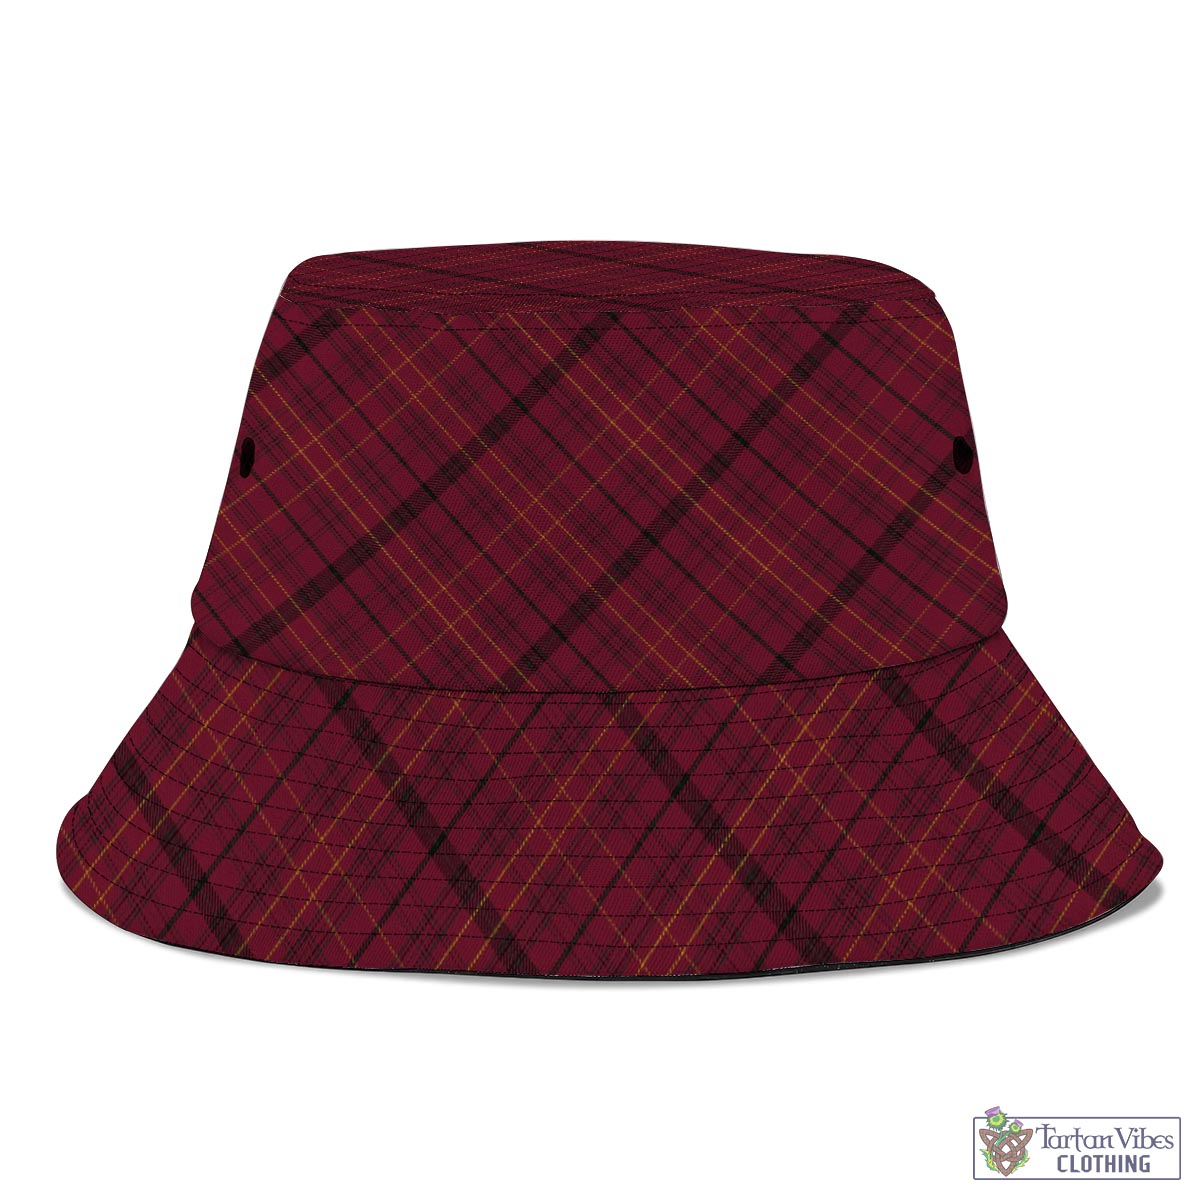 Tartan Vibes Clothing Williams of Wales Tartan Bucket Hat